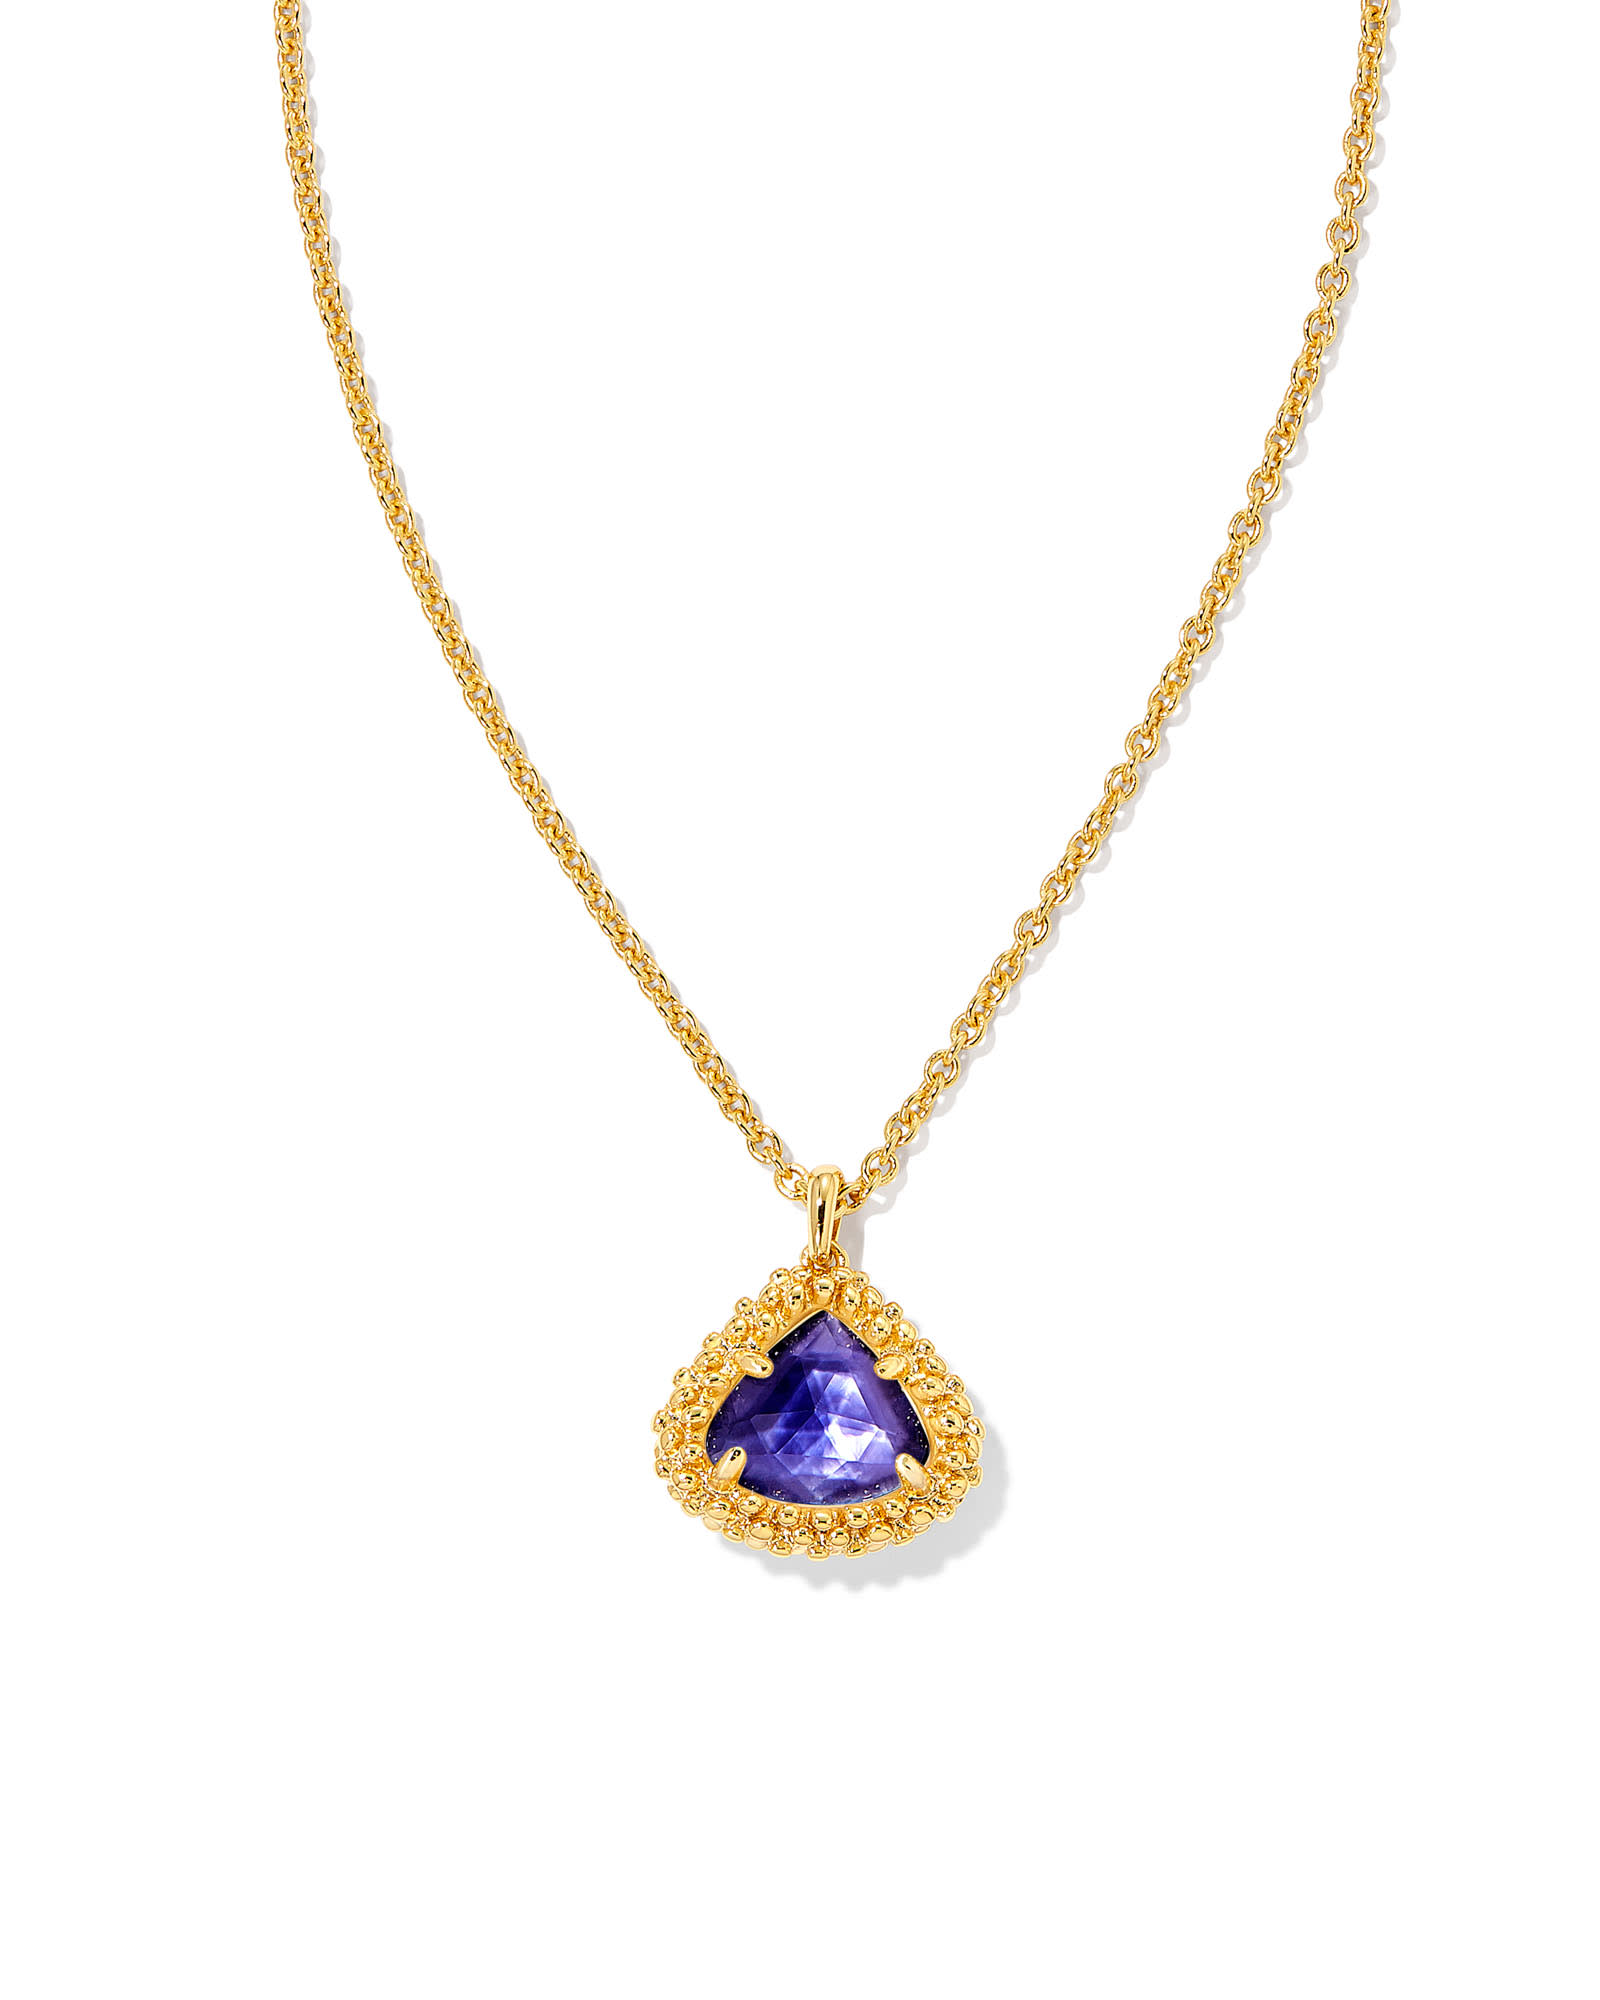 Framed Kendall Gold Short Pendant Necklace in Dark Lavender Illusion